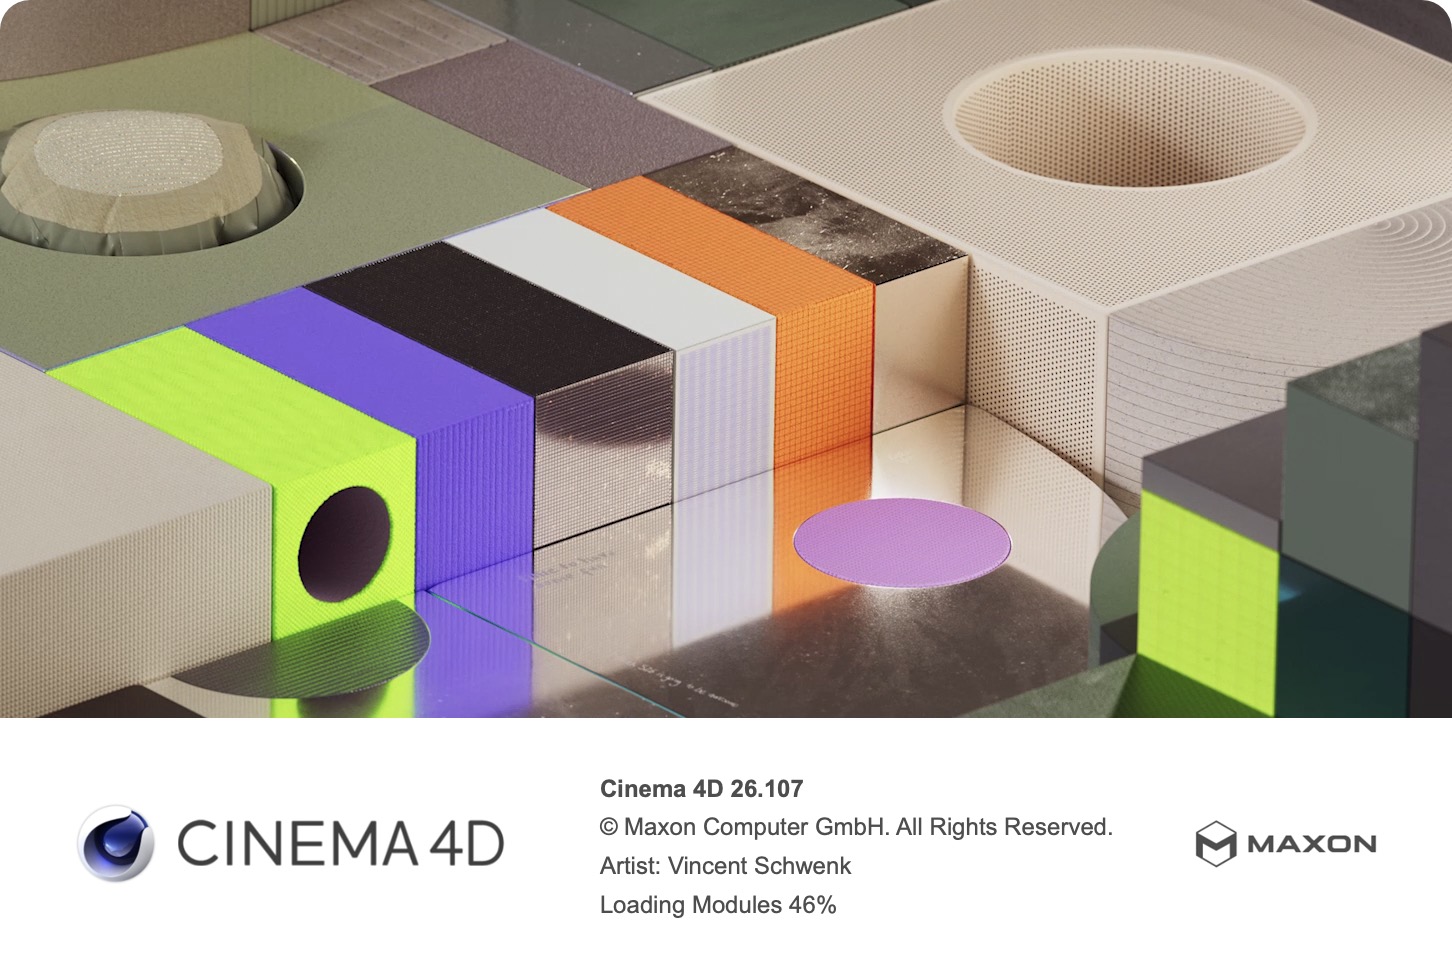 C4D动画渲染软件 Cinema 4D for Mac R26.107 中文版下载